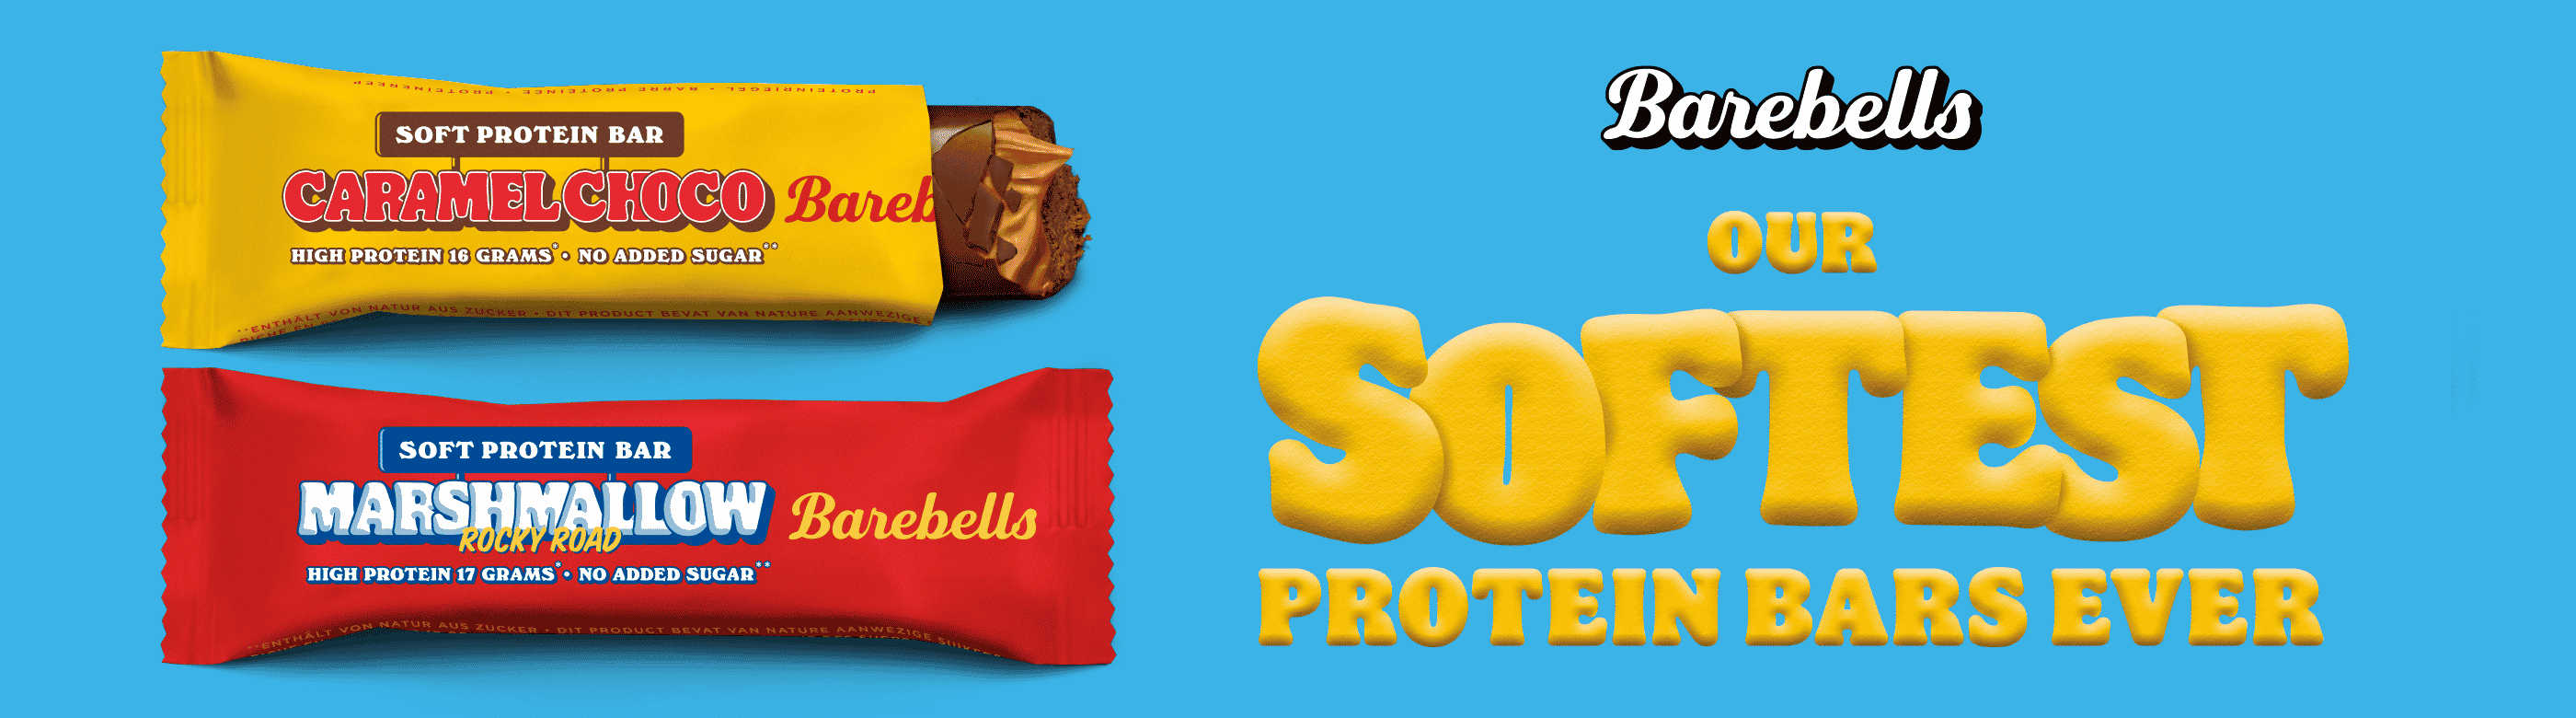 barebells Soft protein riegel